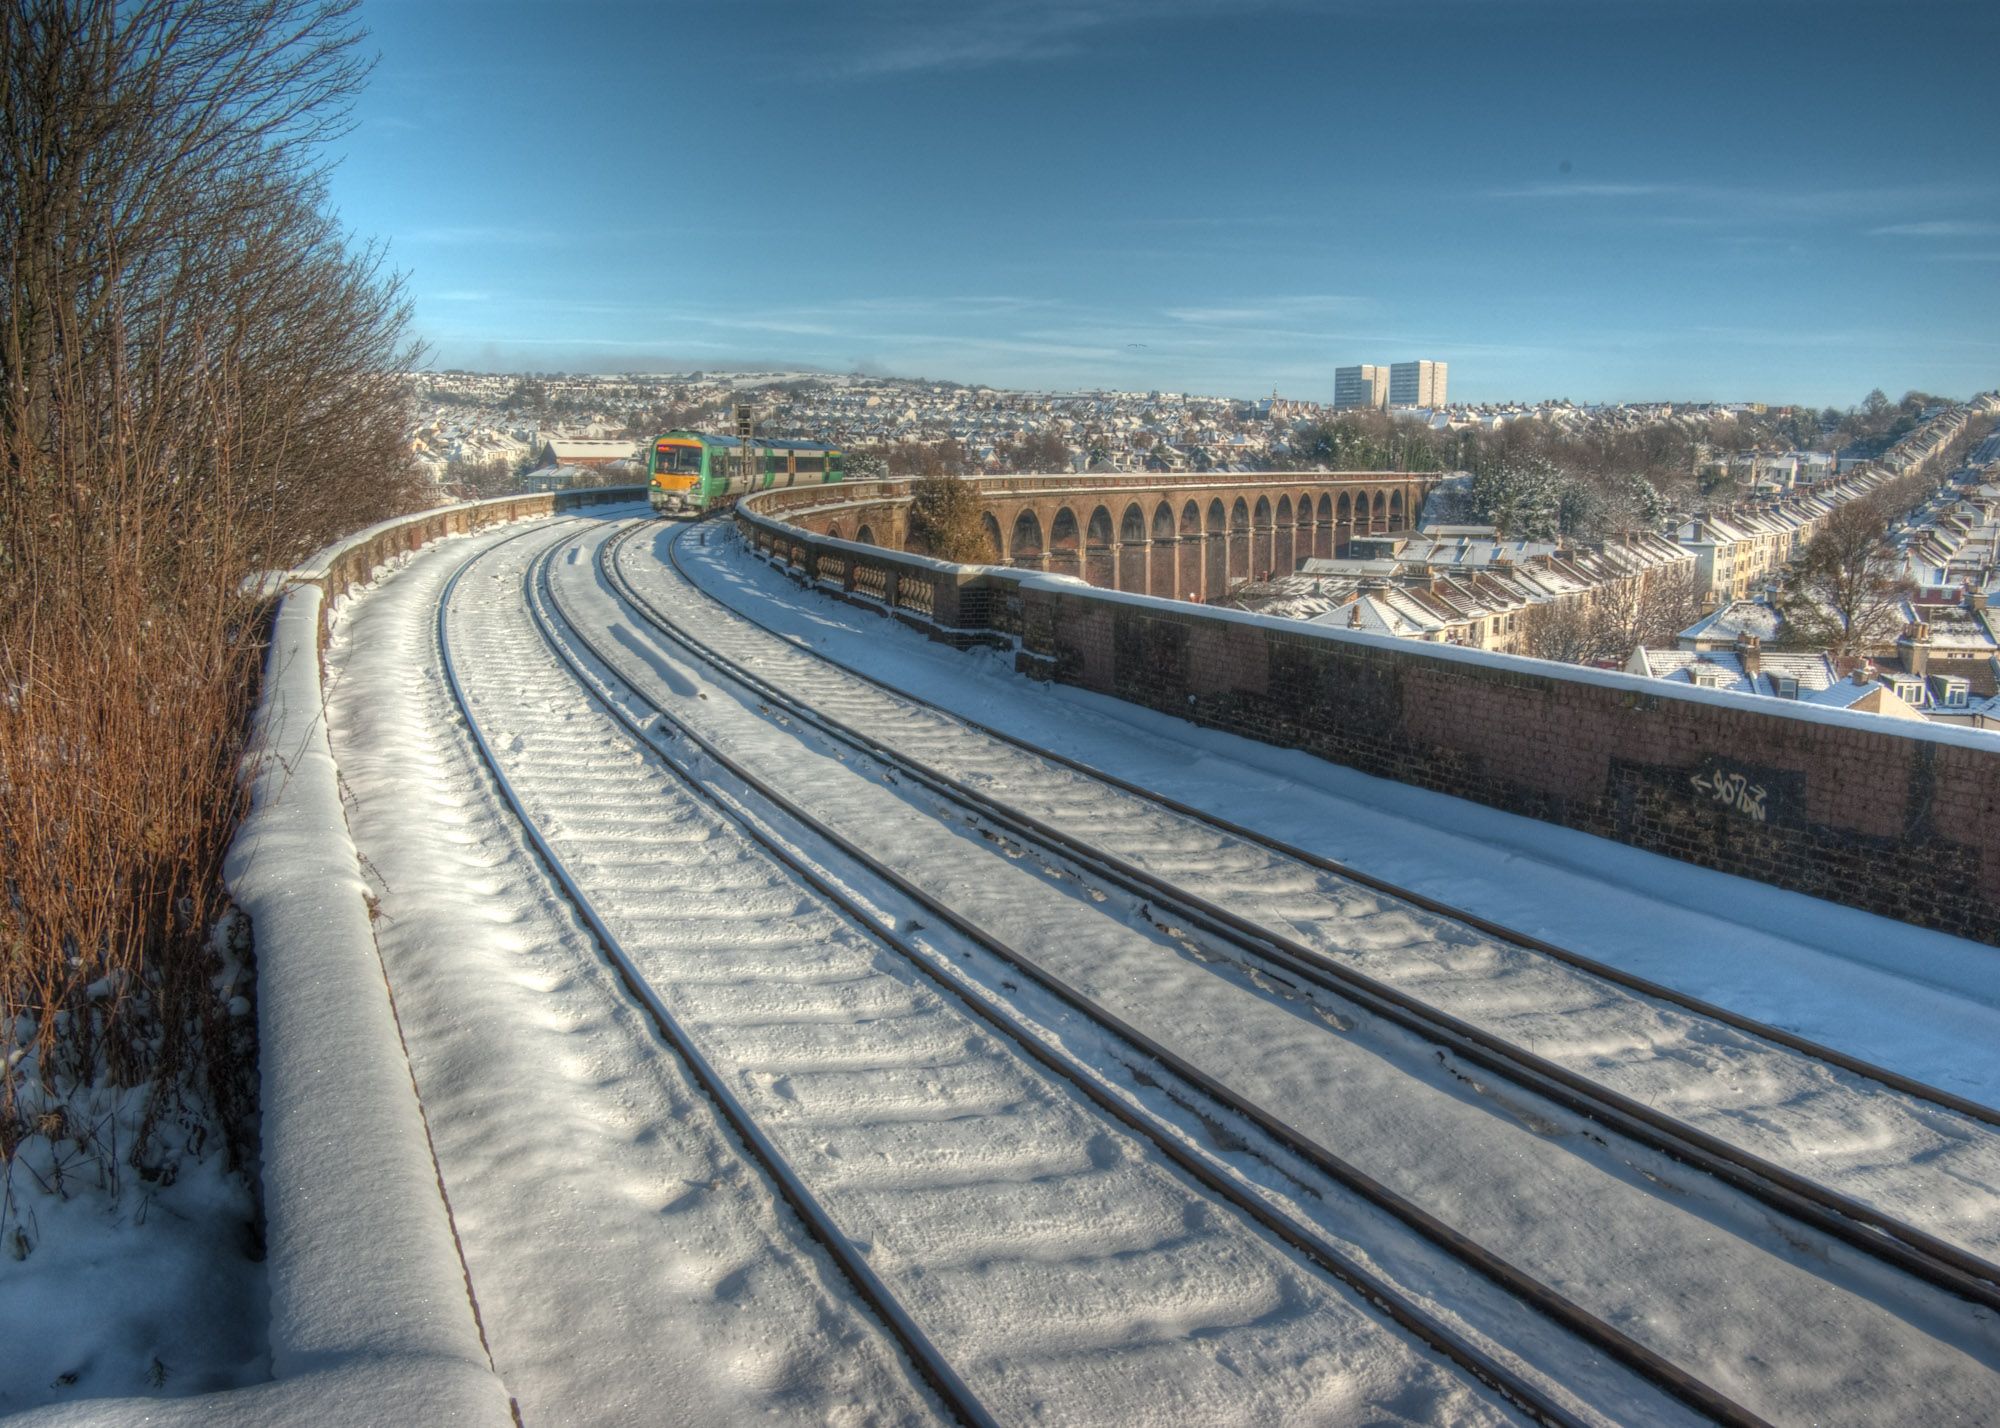 Rail tracks in snow